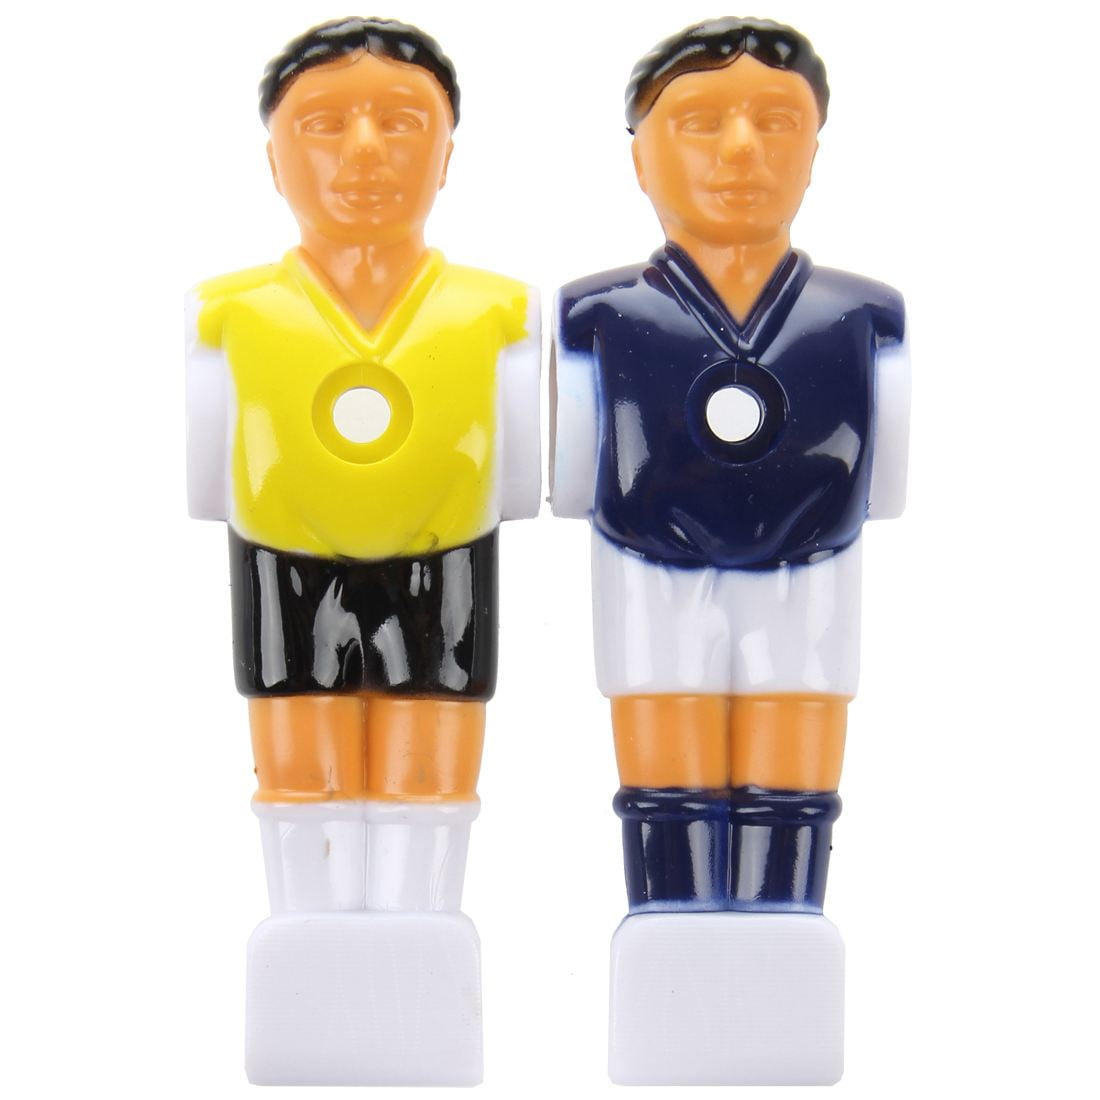 22pcs Hard Plastic Foosball Soccer Table football Soccer Man Player Figures 